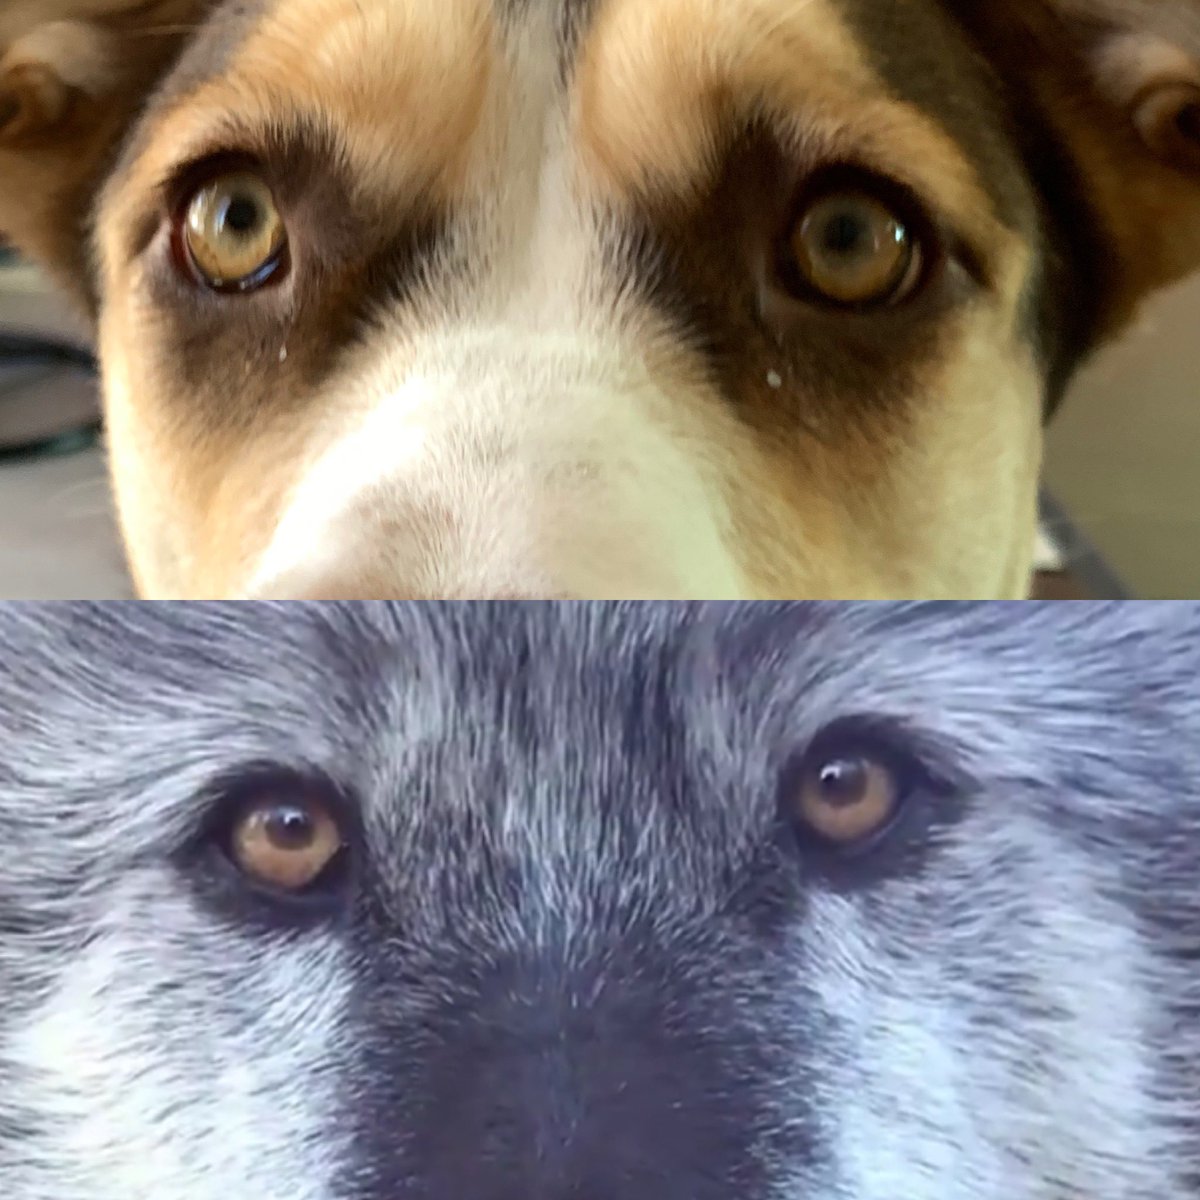 Nova: #PhotoChallenge2020February 
Day 28 - eyes -
Dad says I have Wolfy eyes... 
OF COURSE! 
I AM NOVA, QUEEN OF THE NORTH!

#NovaoftheNorth
#AdoptDontShop  #dogsoftwitter